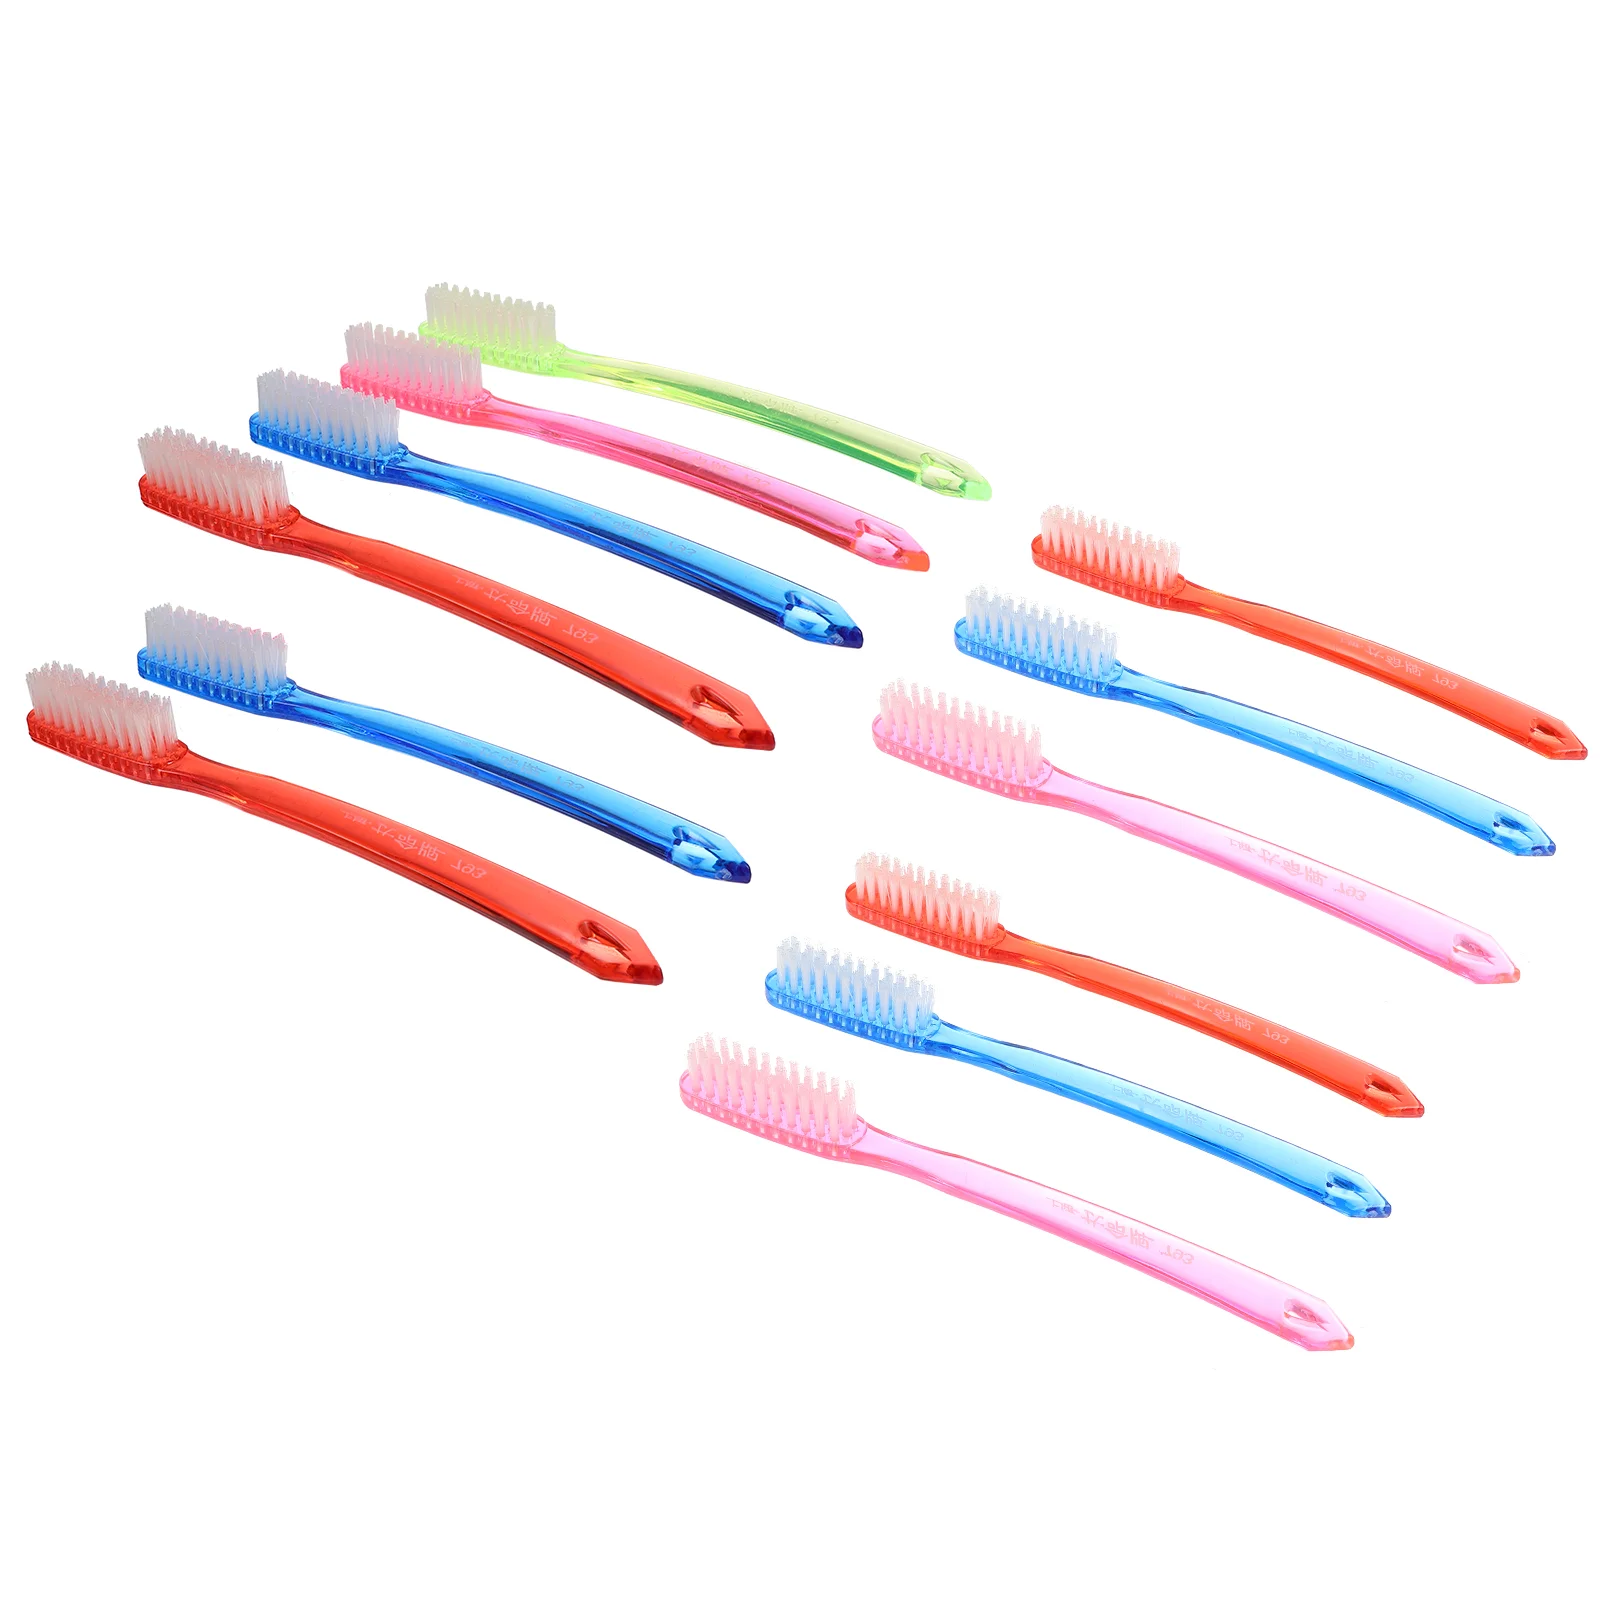 

Denture Teens Hard Toothbrushes Care Teeth Brushbrushes Kids Cleaning Clean Burshportable Interdental Head False Double Manual